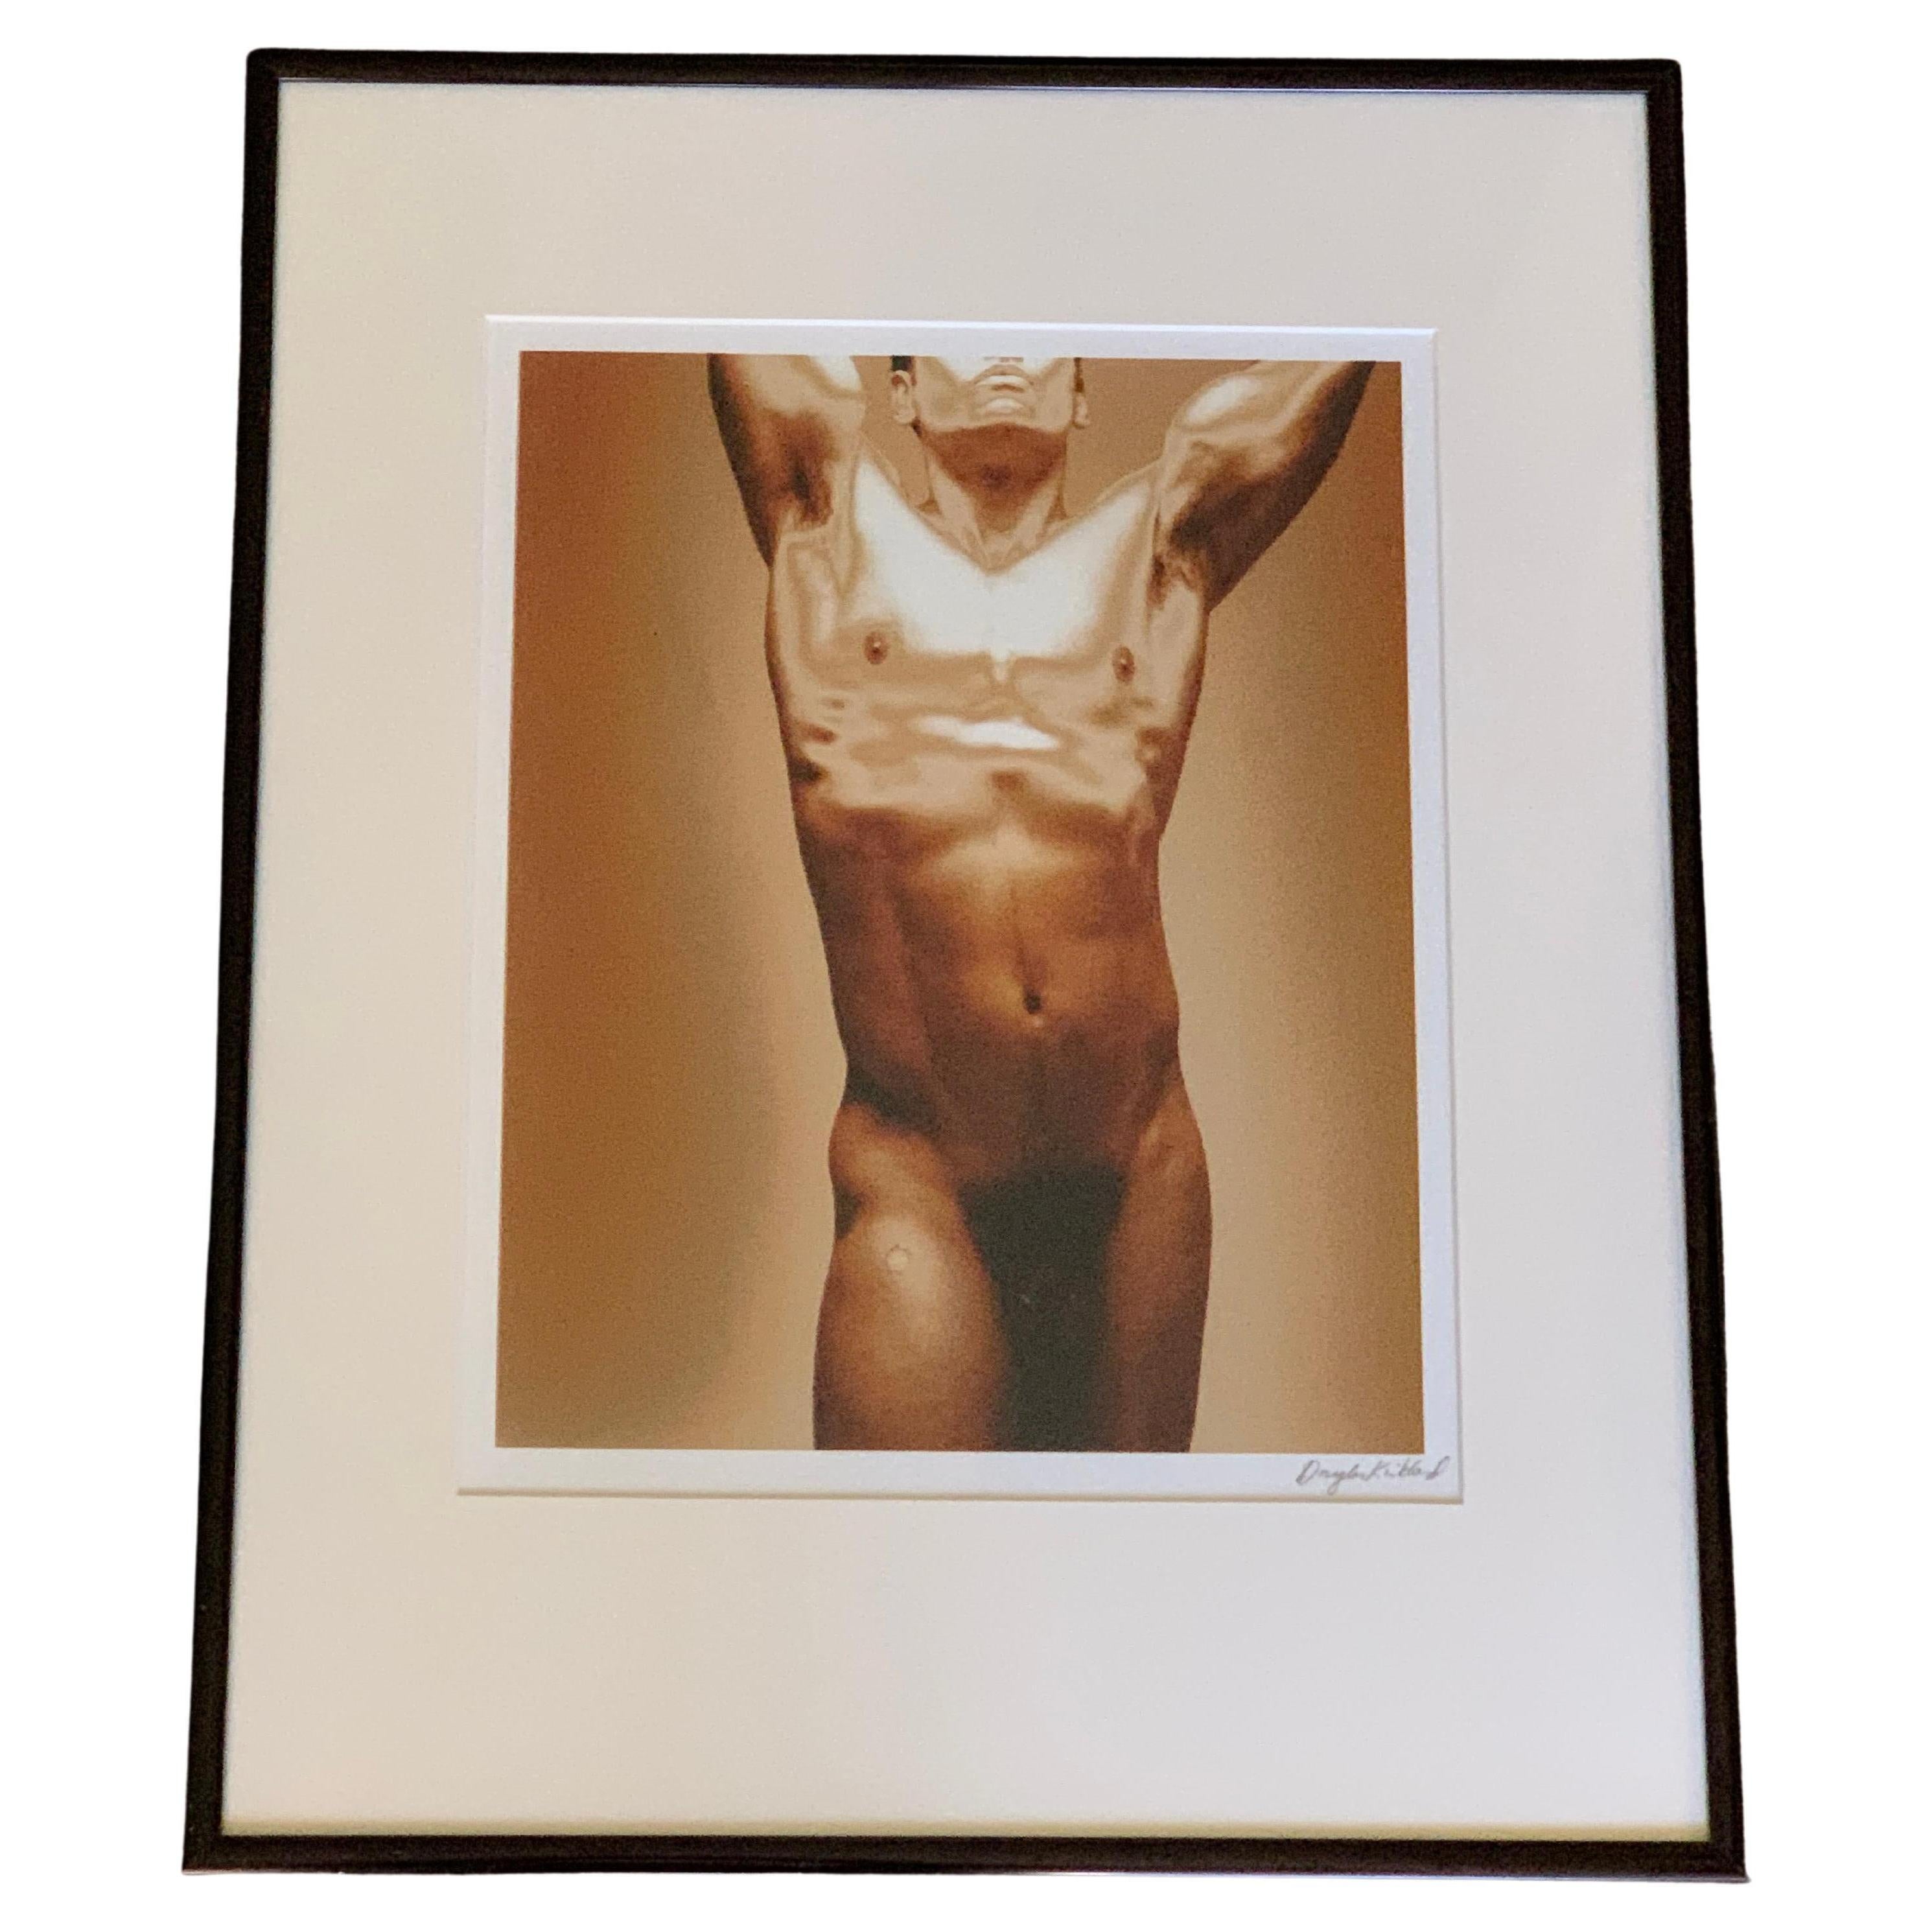 Douglas Kirkland "Golden Boy" Rare Male Nude Original Photograph For Sale